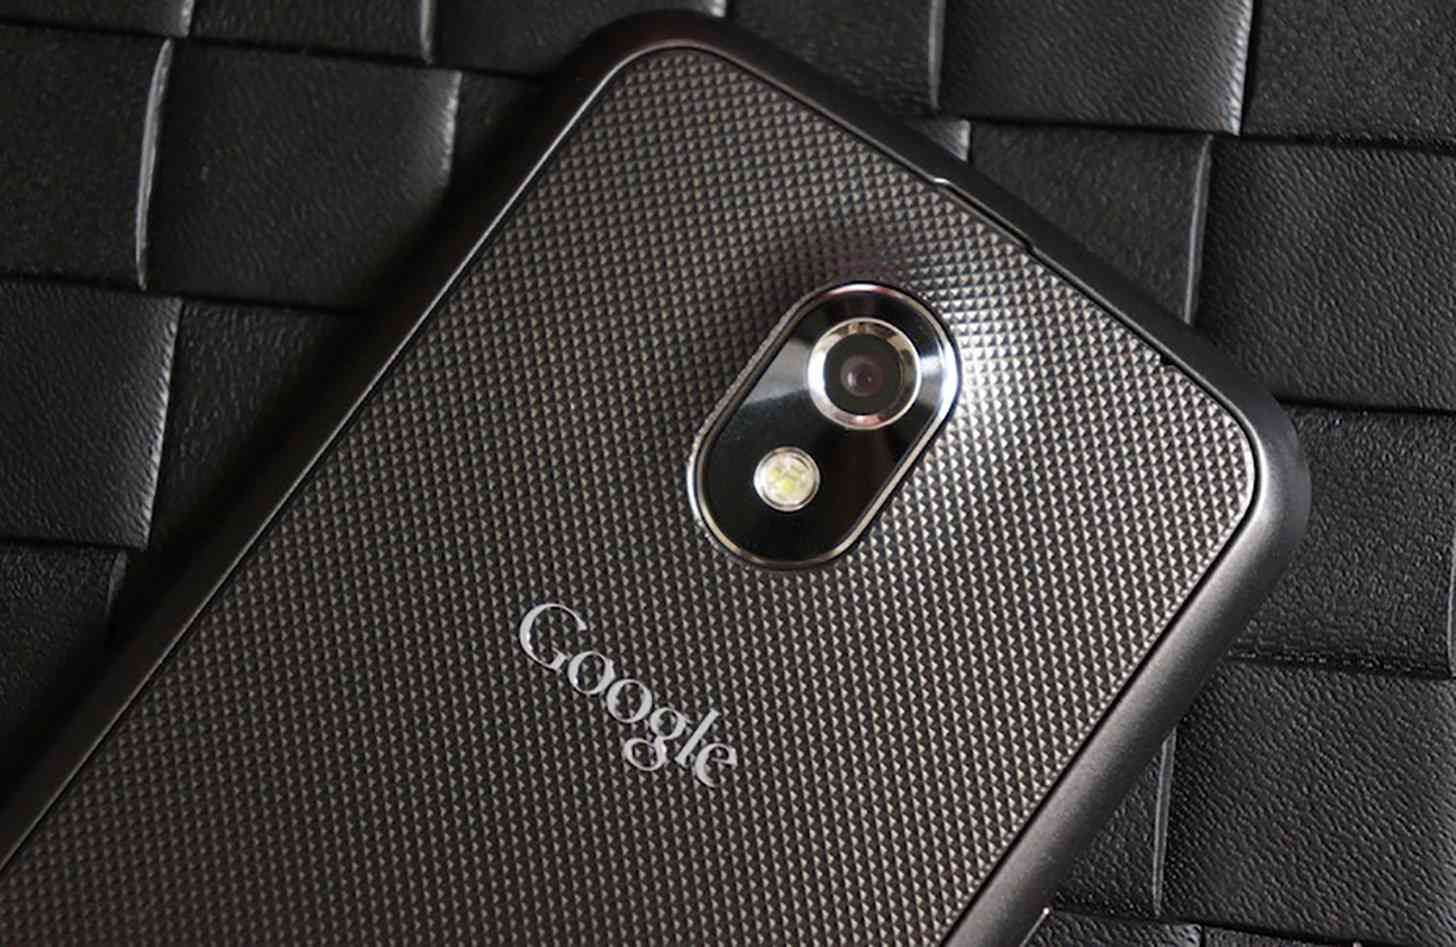 Google logo Samsung Galaxy Nexus rear